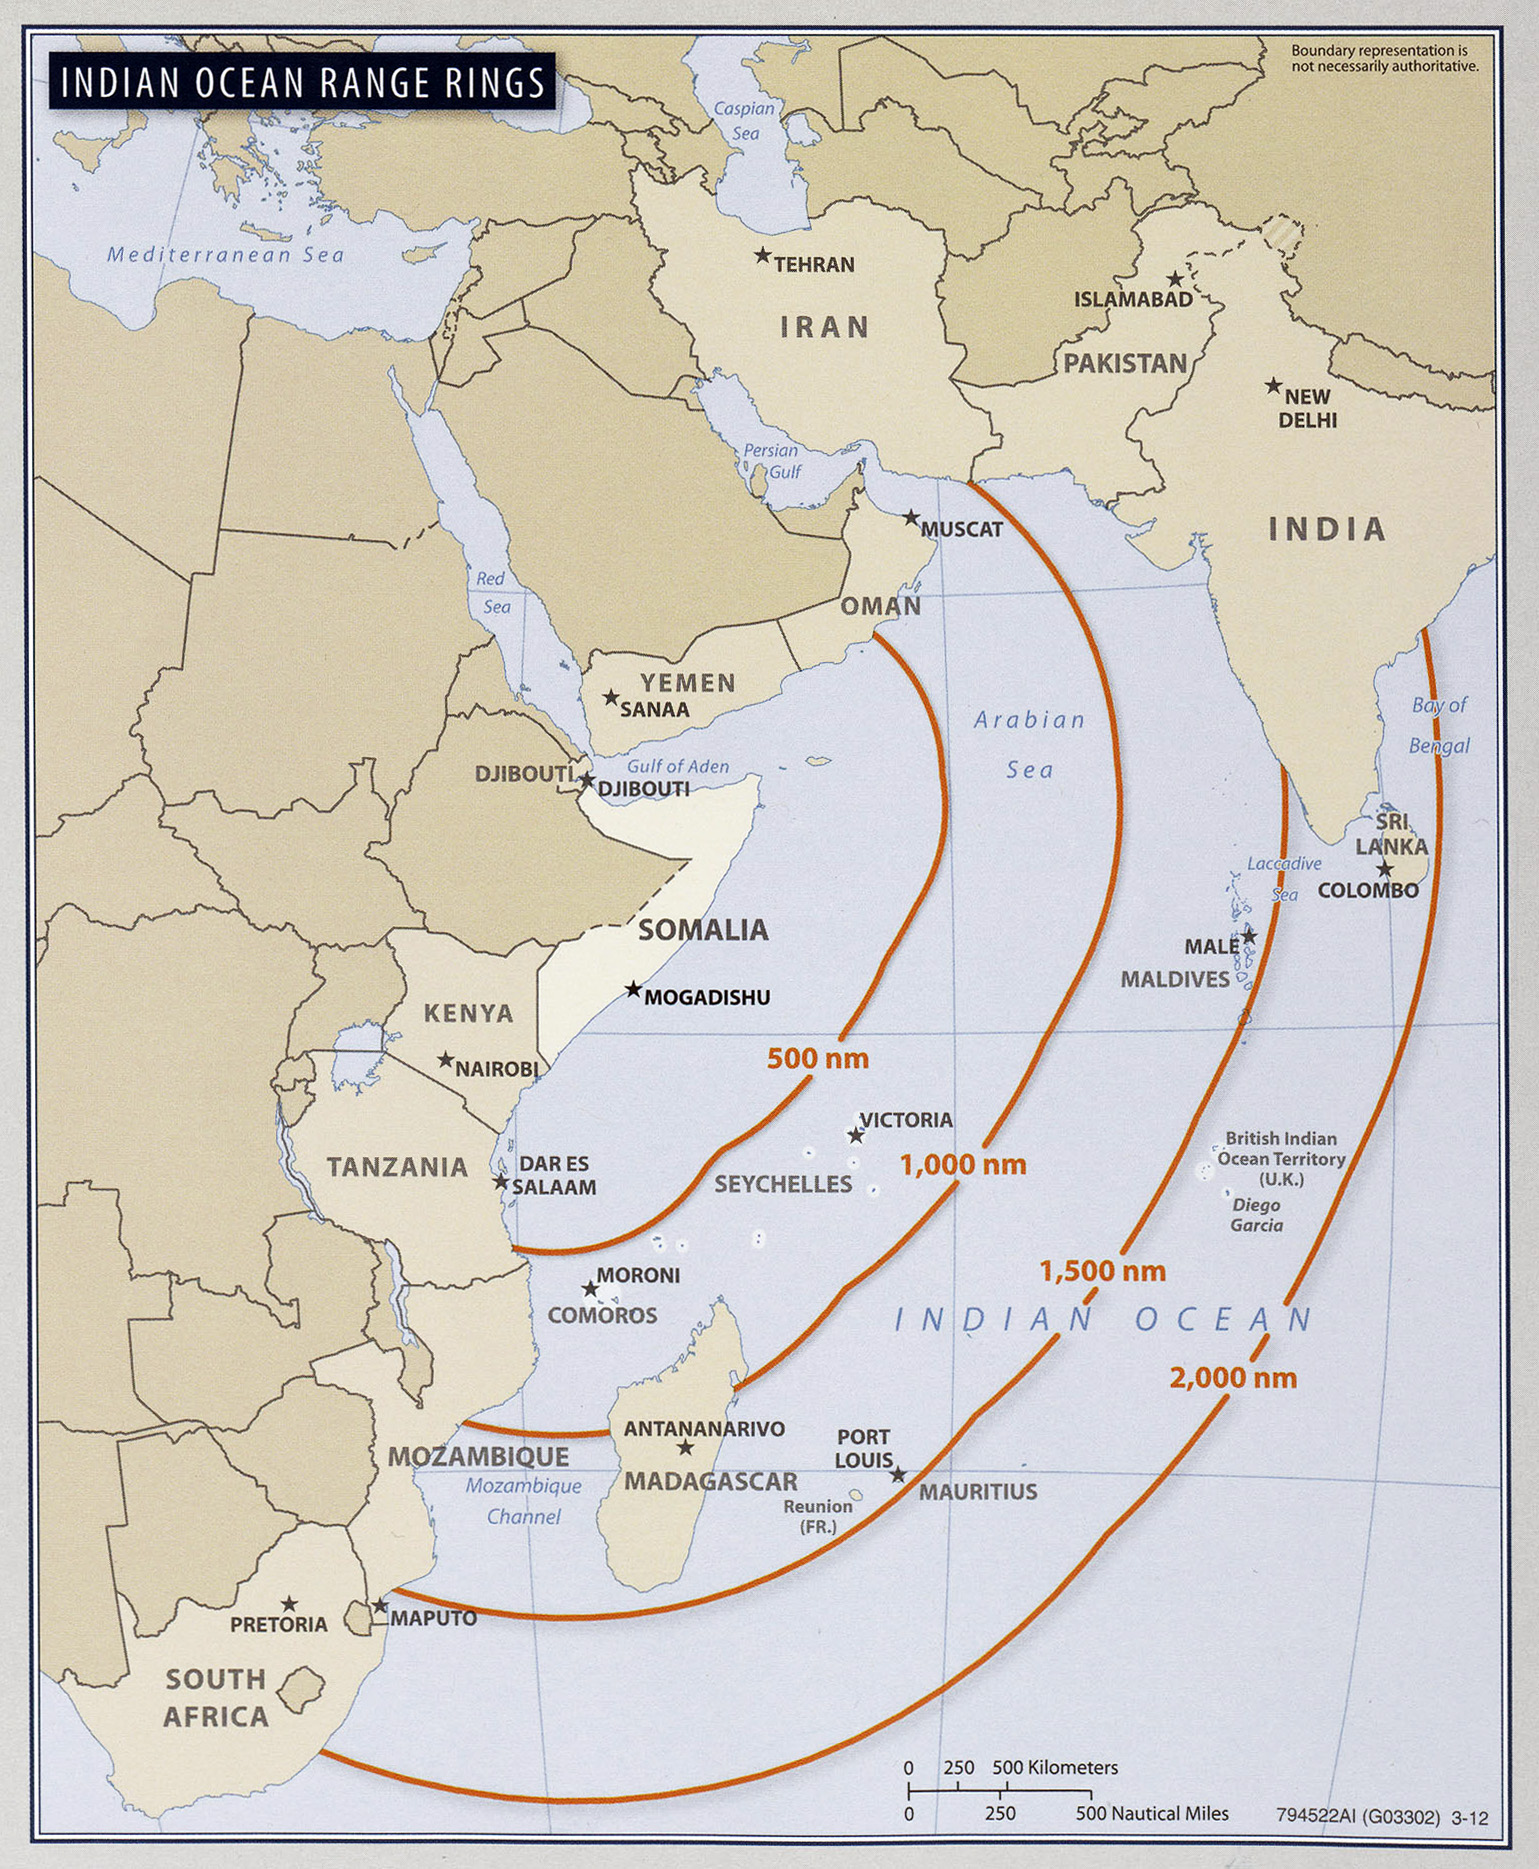 txu-pclmaps-oclc-795784383-somalia_2012_indian_ocean_range_rings.jpg